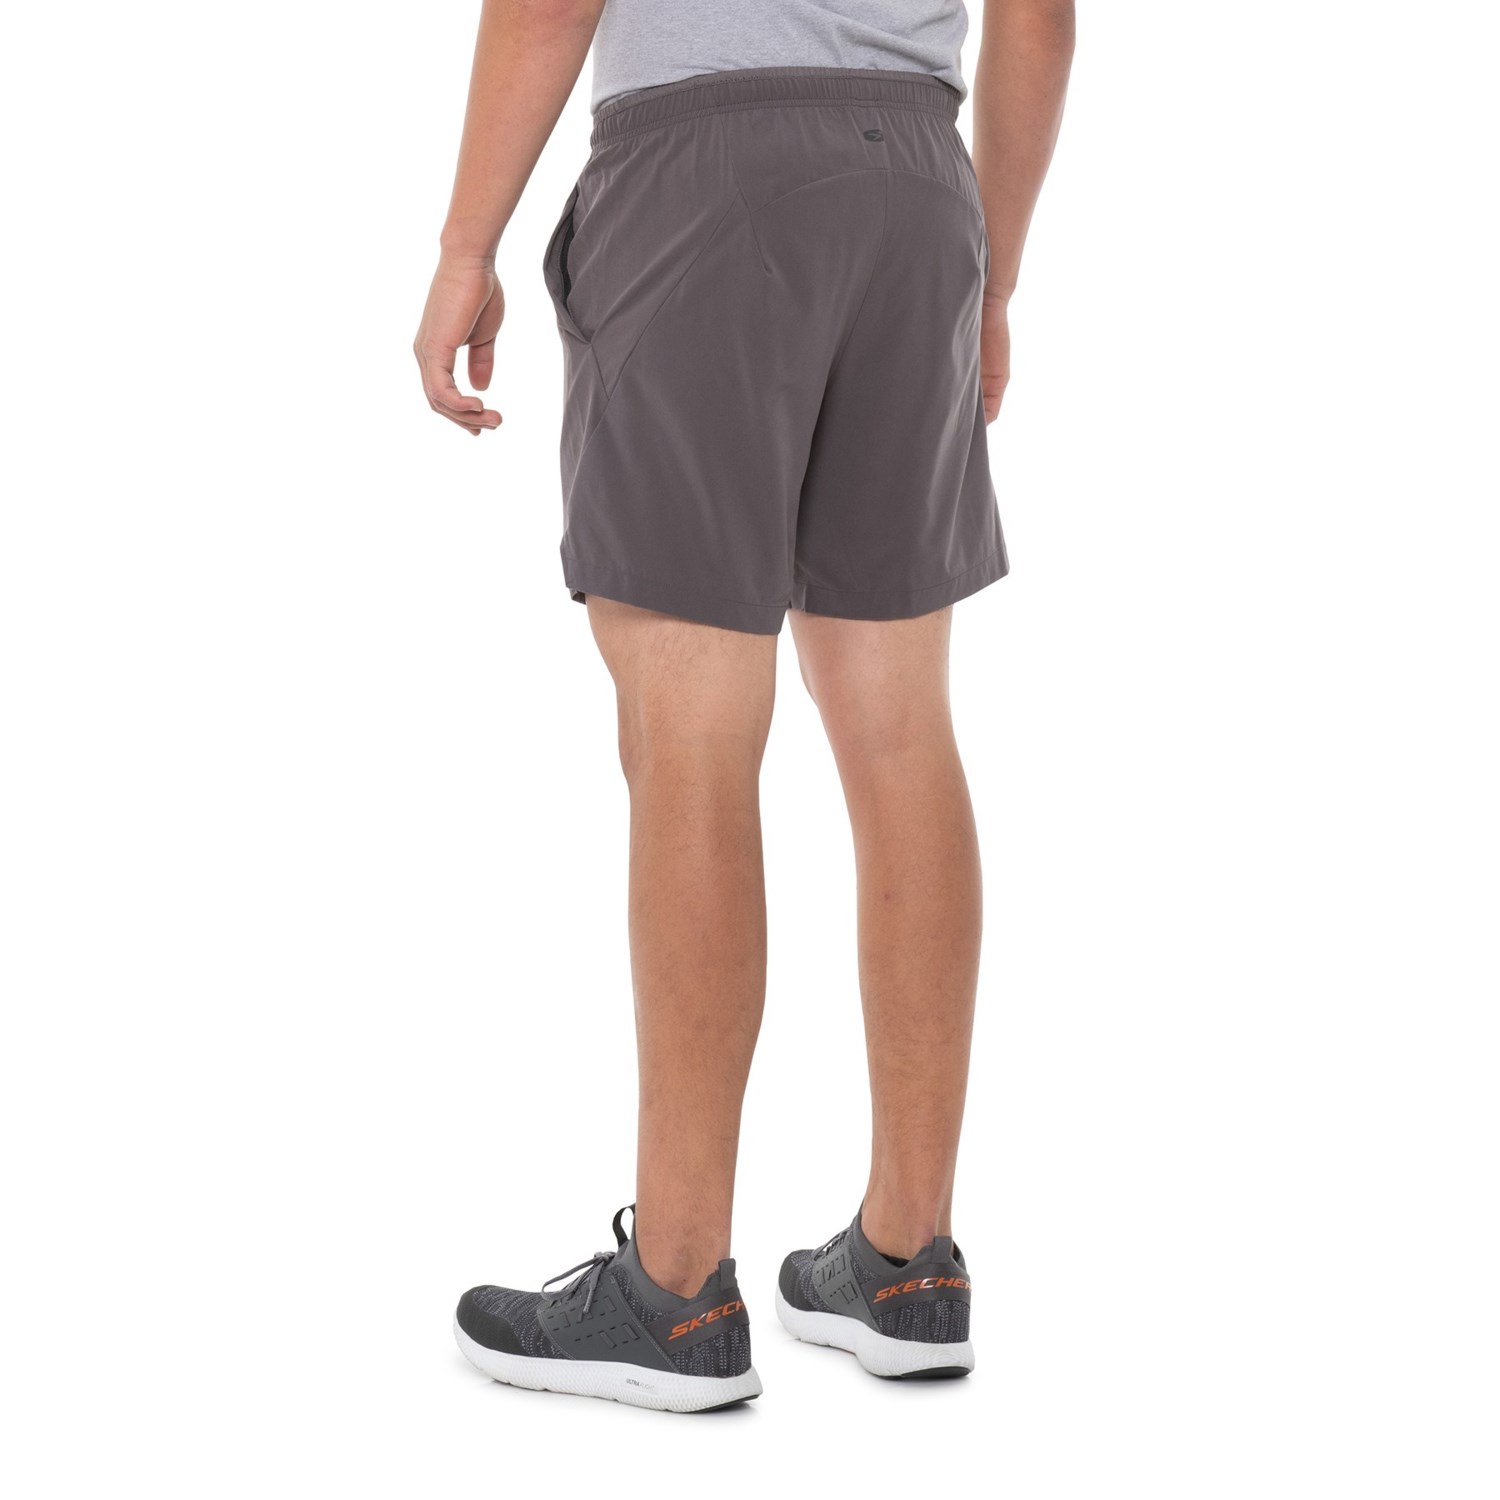 SUGOi Titan Training Shorts (For Men) - Save 55%